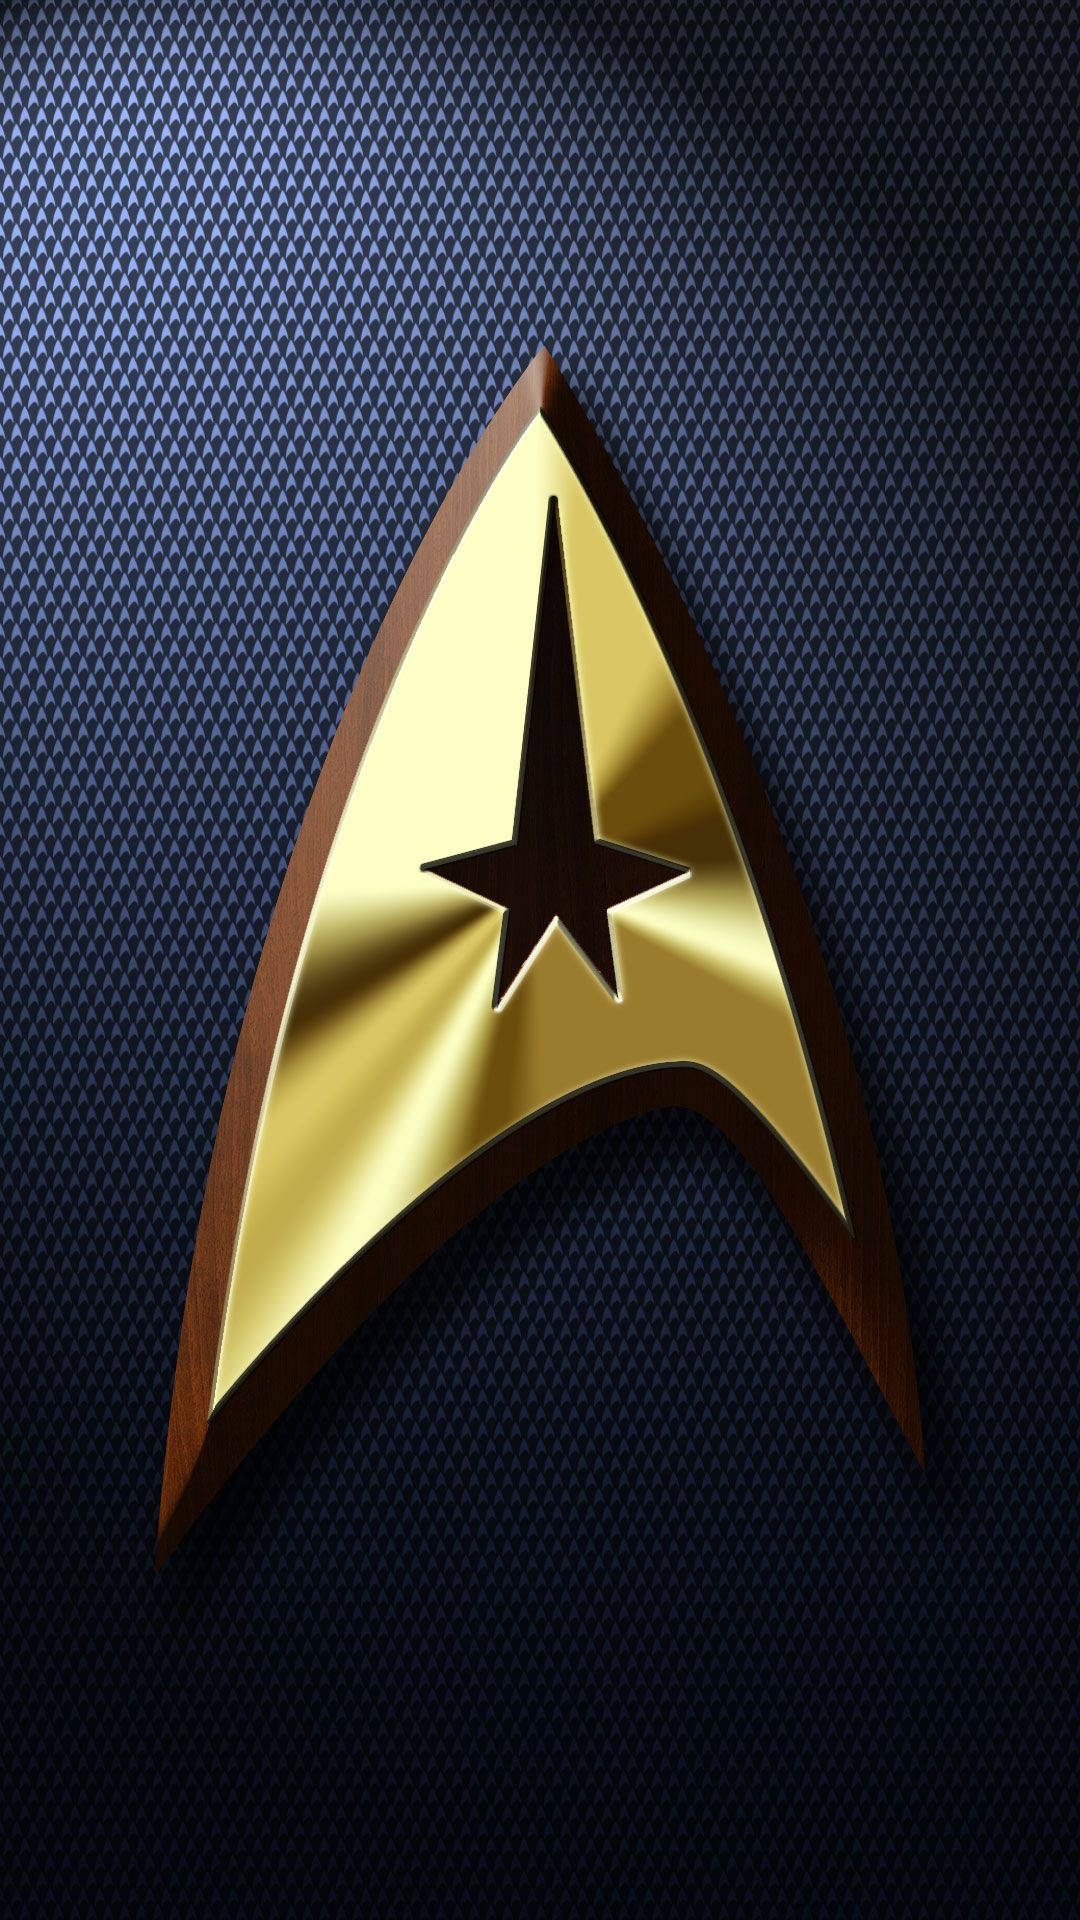 Free Star Trek Iphone Wallpaper Downloads, [100+] Star Trek Iphone  Wallpapers for FREE 